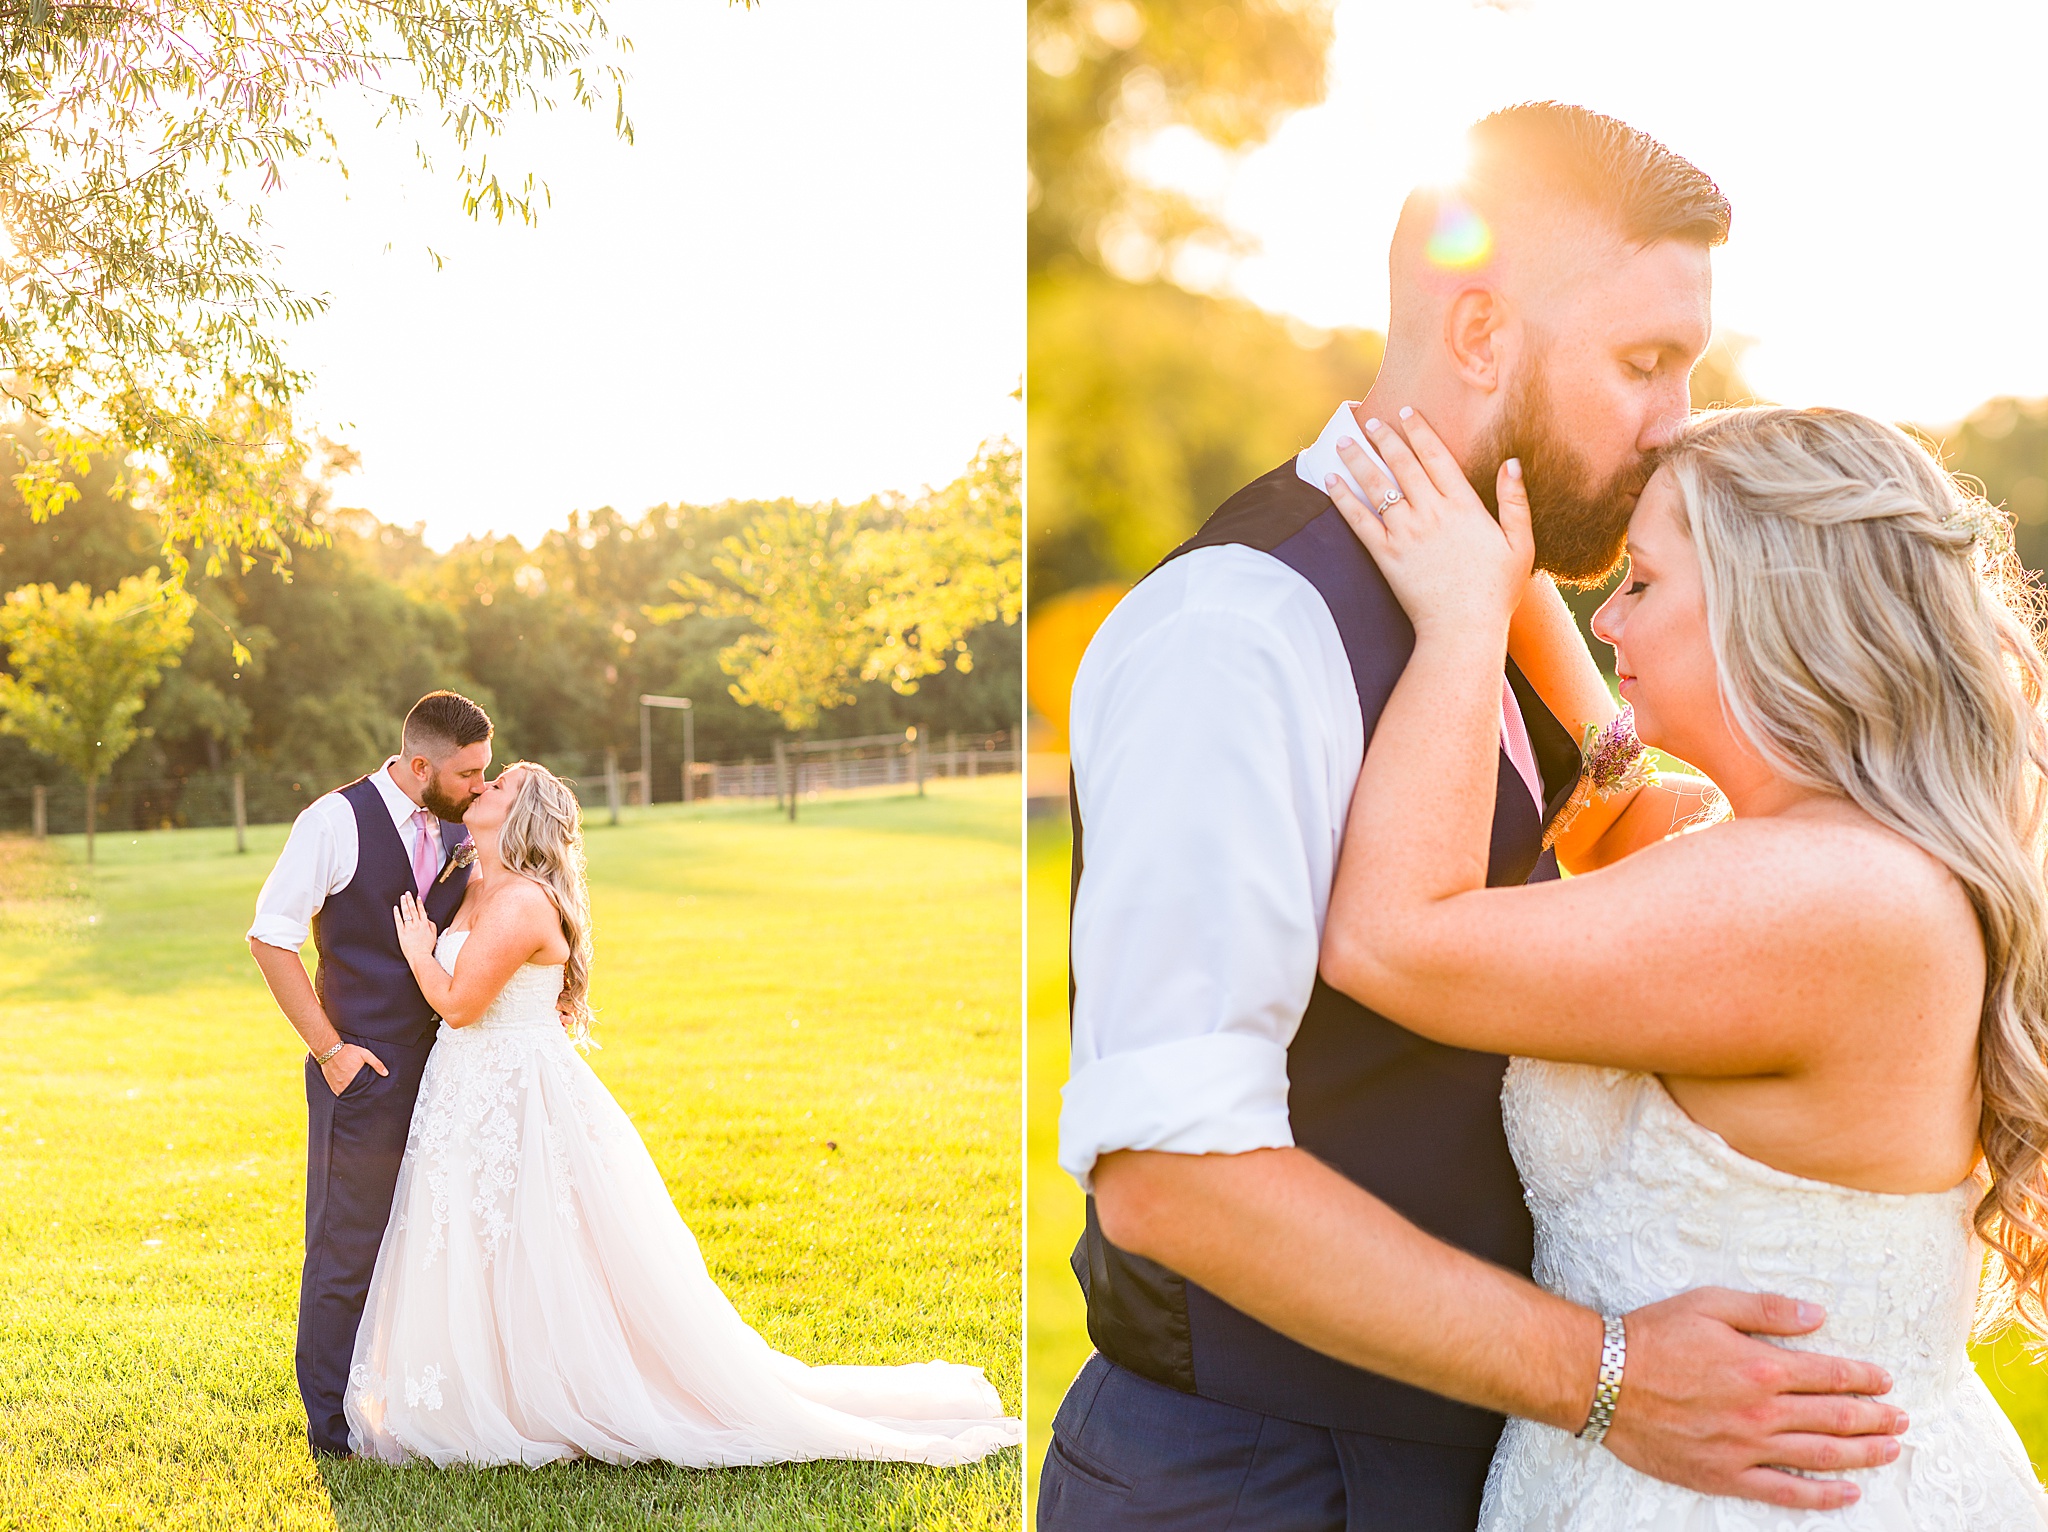 wedding photos by Alexandra Mandato Photography in Maryland at Green Meadows Farm